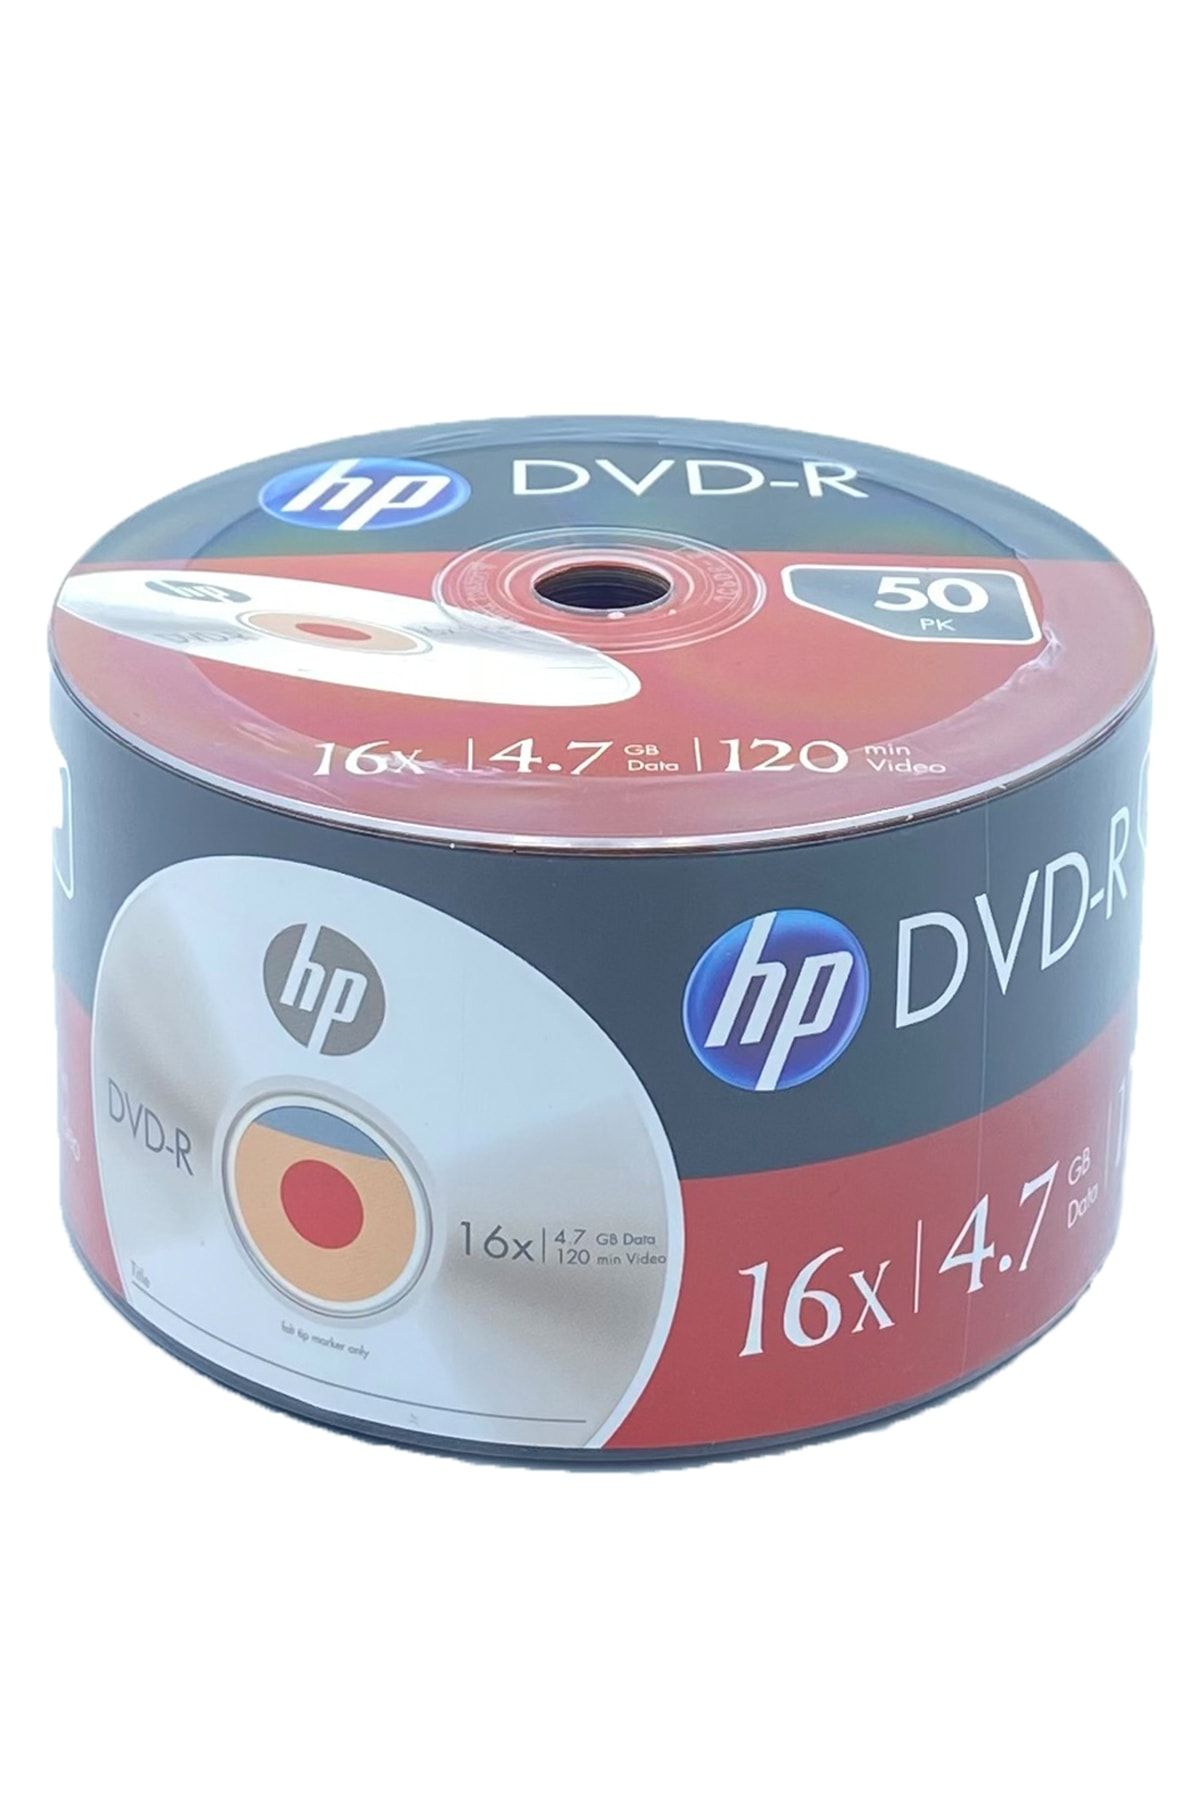 HP Dvd-r 4,7 Gb 120 Min 16* Boş Dvd 50 Adetlik Shrink (DM00070B)